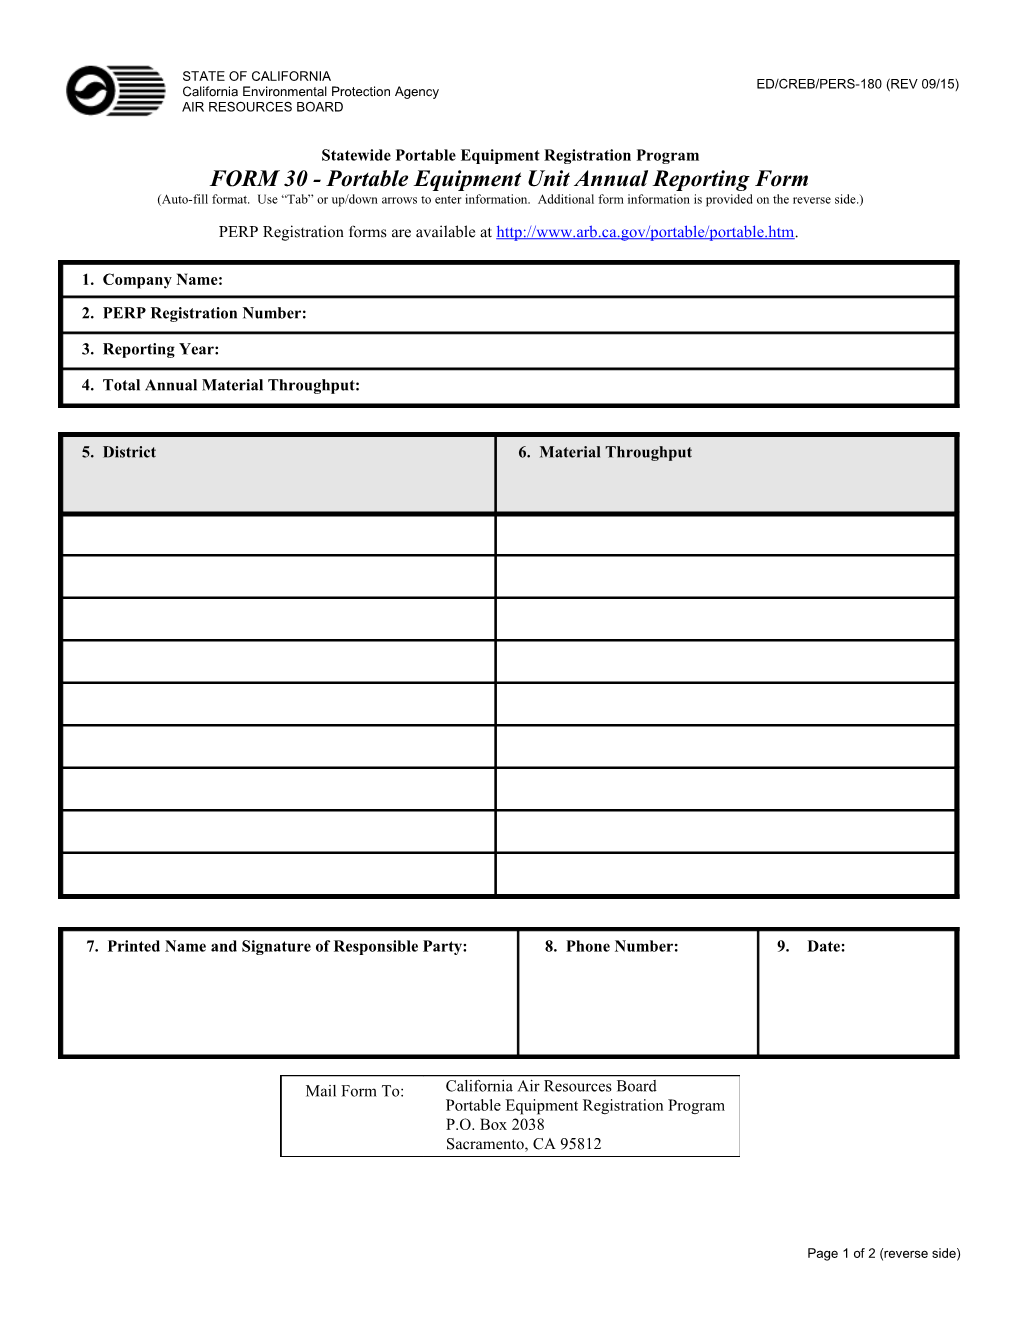 Statewide Portable Equipment Registration Program - FORM 26